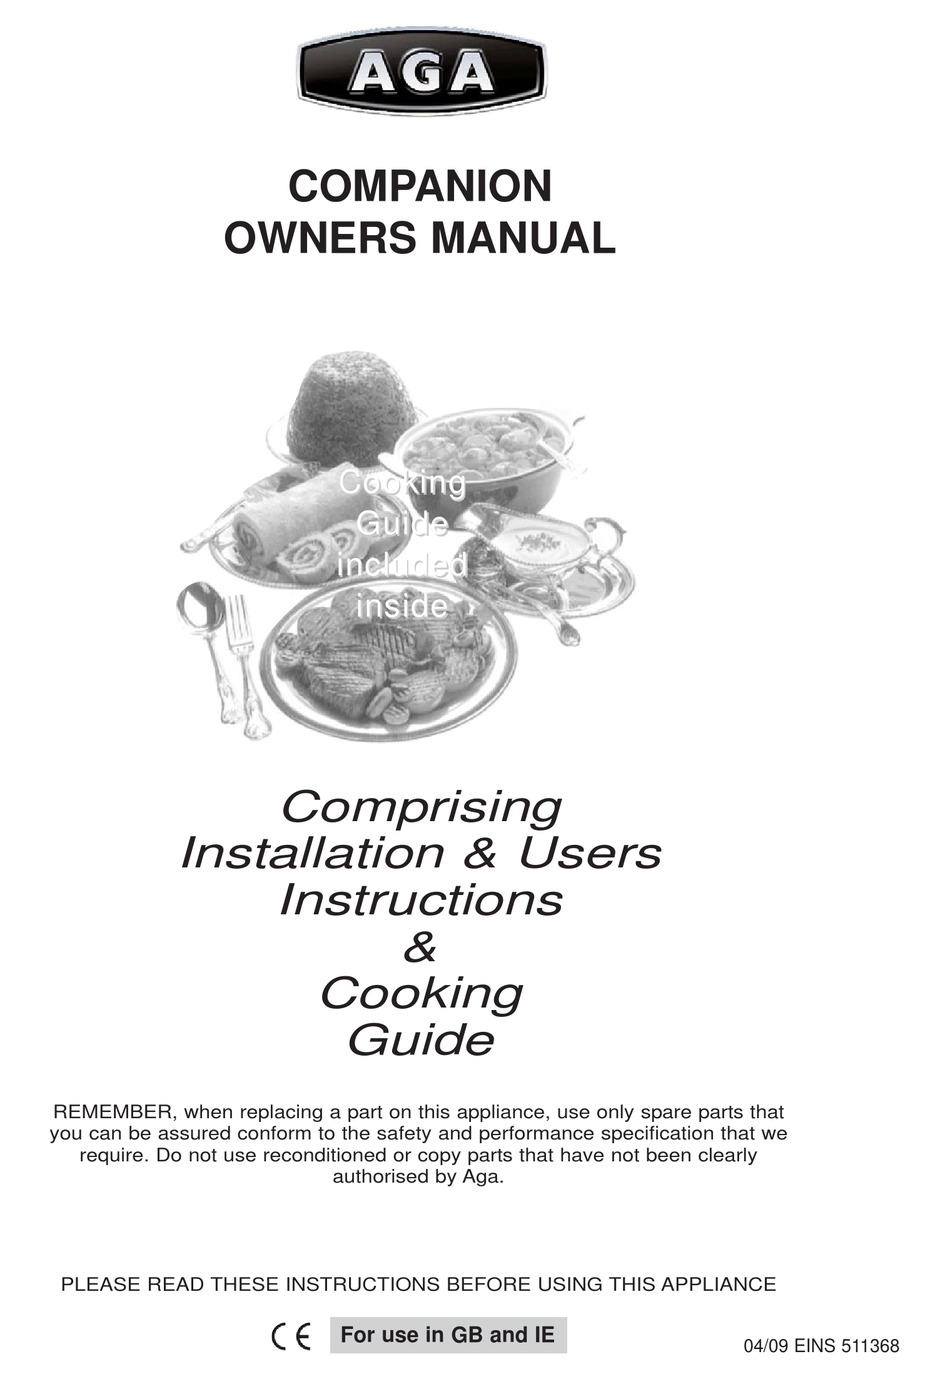 AGA COMPANION OWNER'S MANUAL Pdf Download | ManualsLib